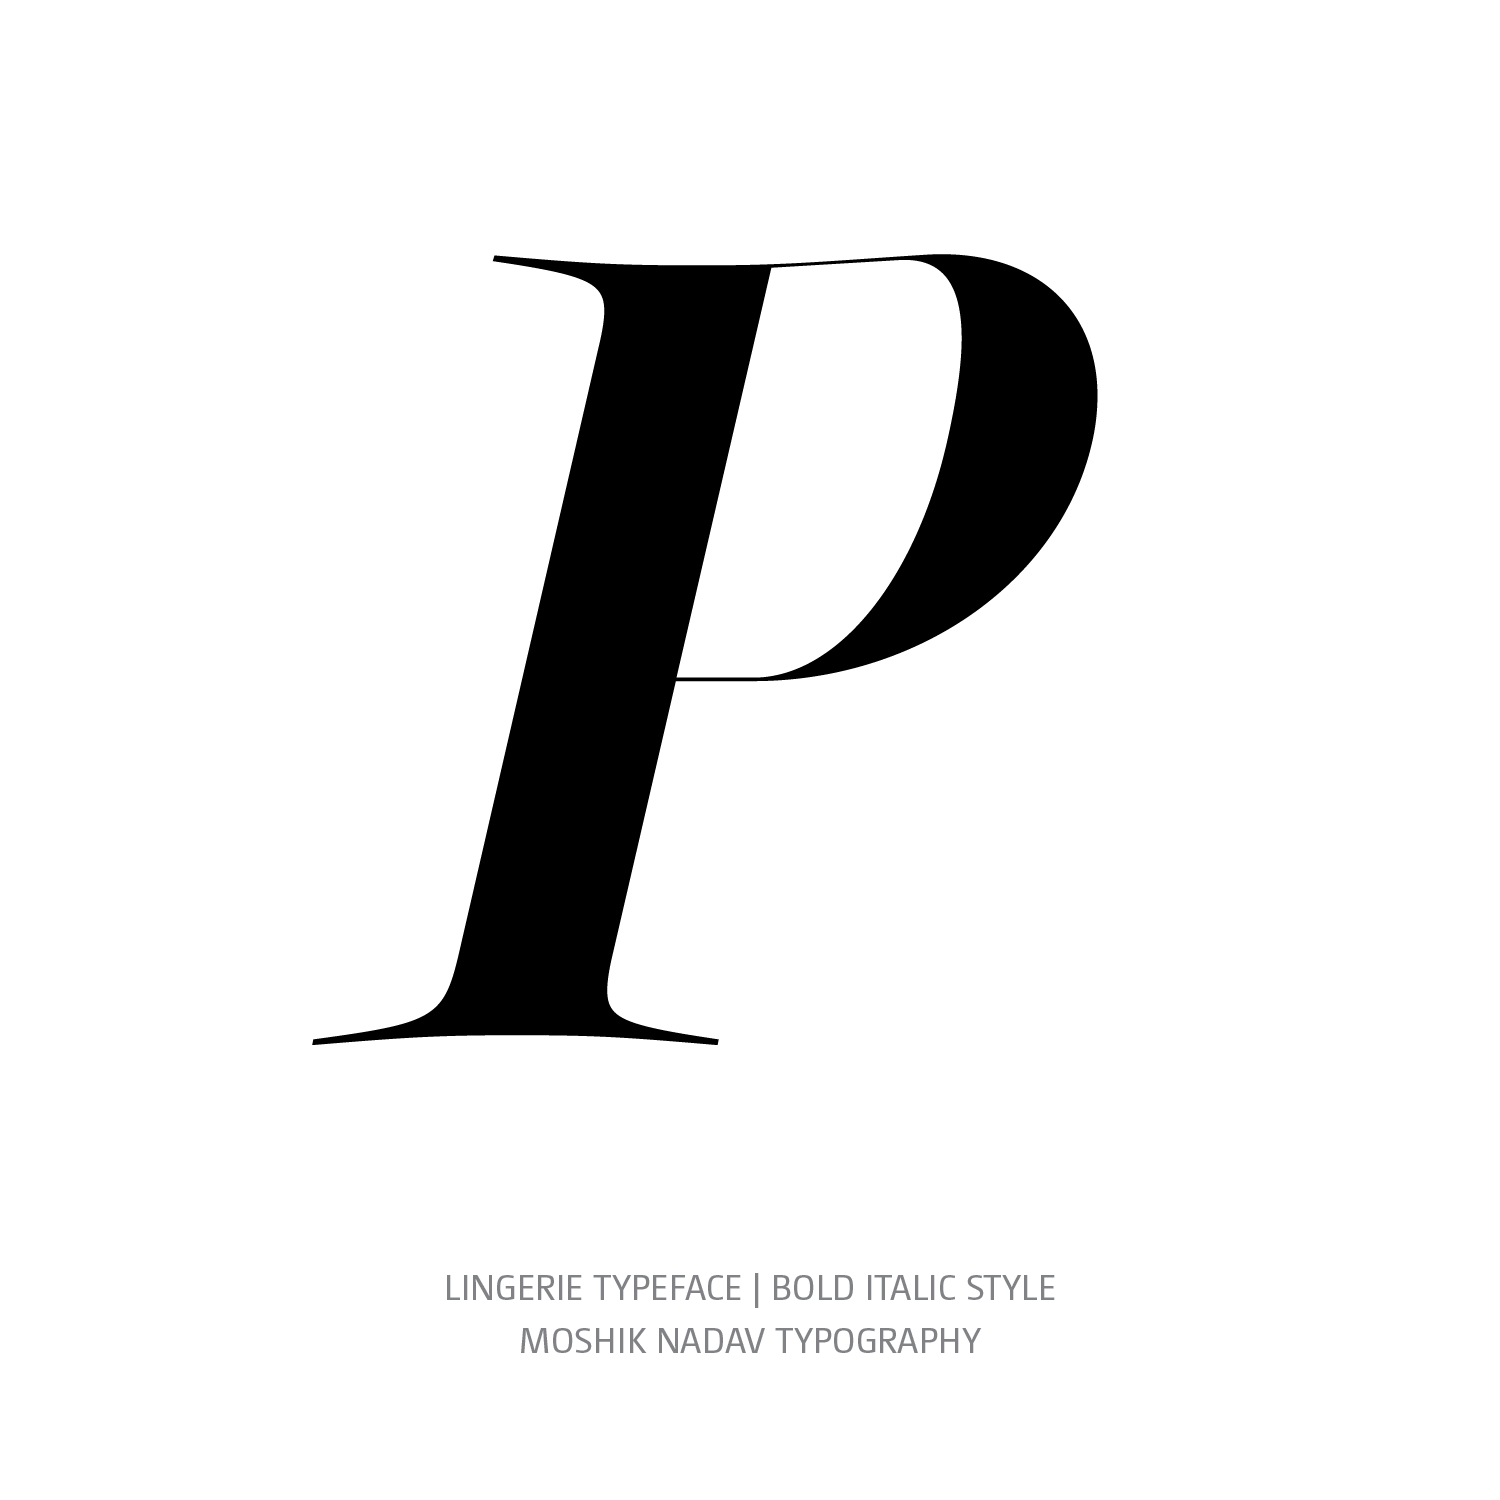 Lingerie Typeface Bold Italic P